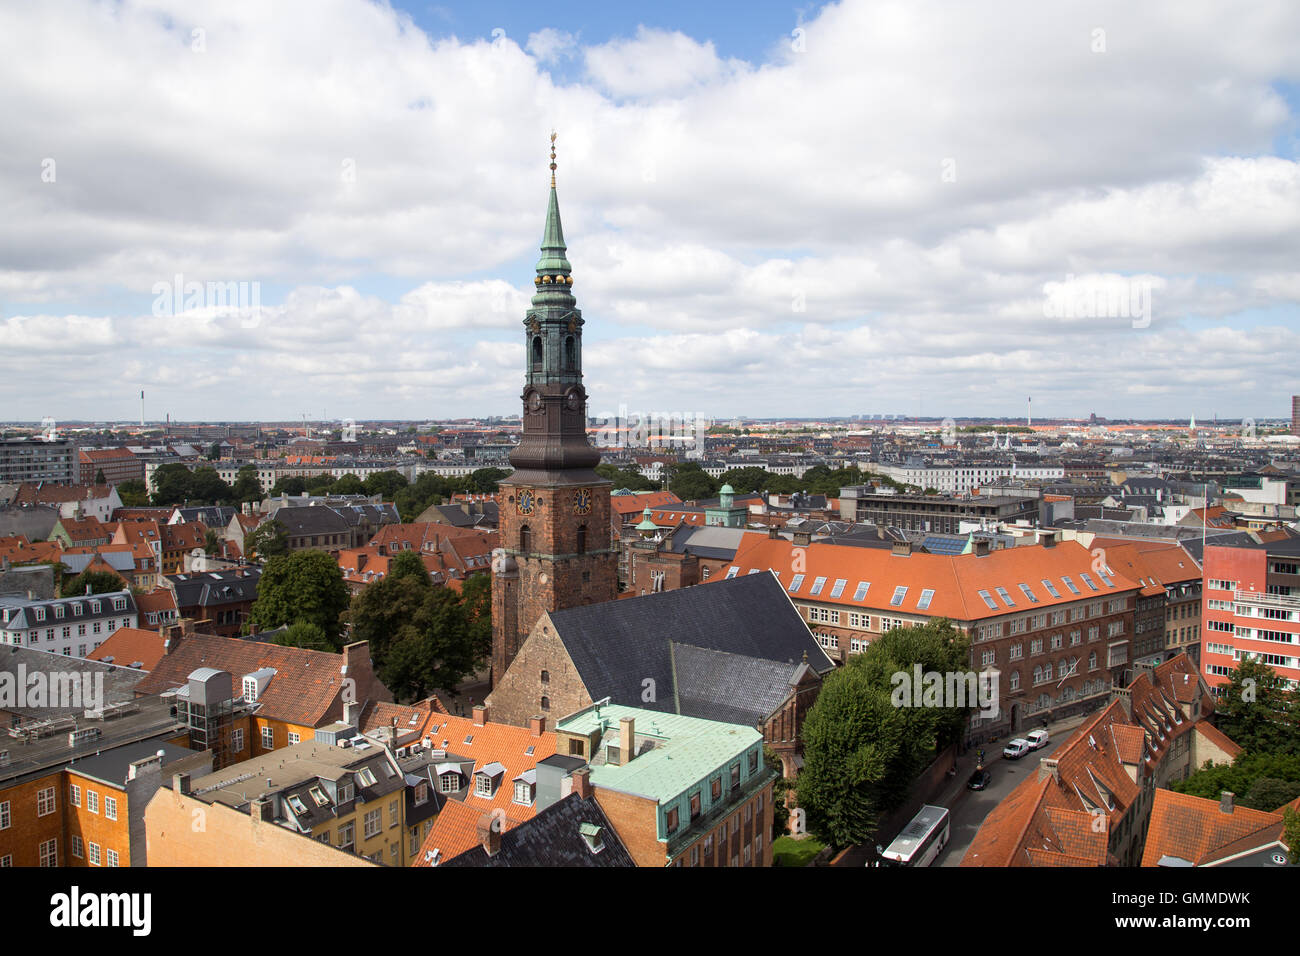 Copenhagen, Denmark - August 15, 2016: Aerial view of Sankt Petri Church in the city center Stock Photo